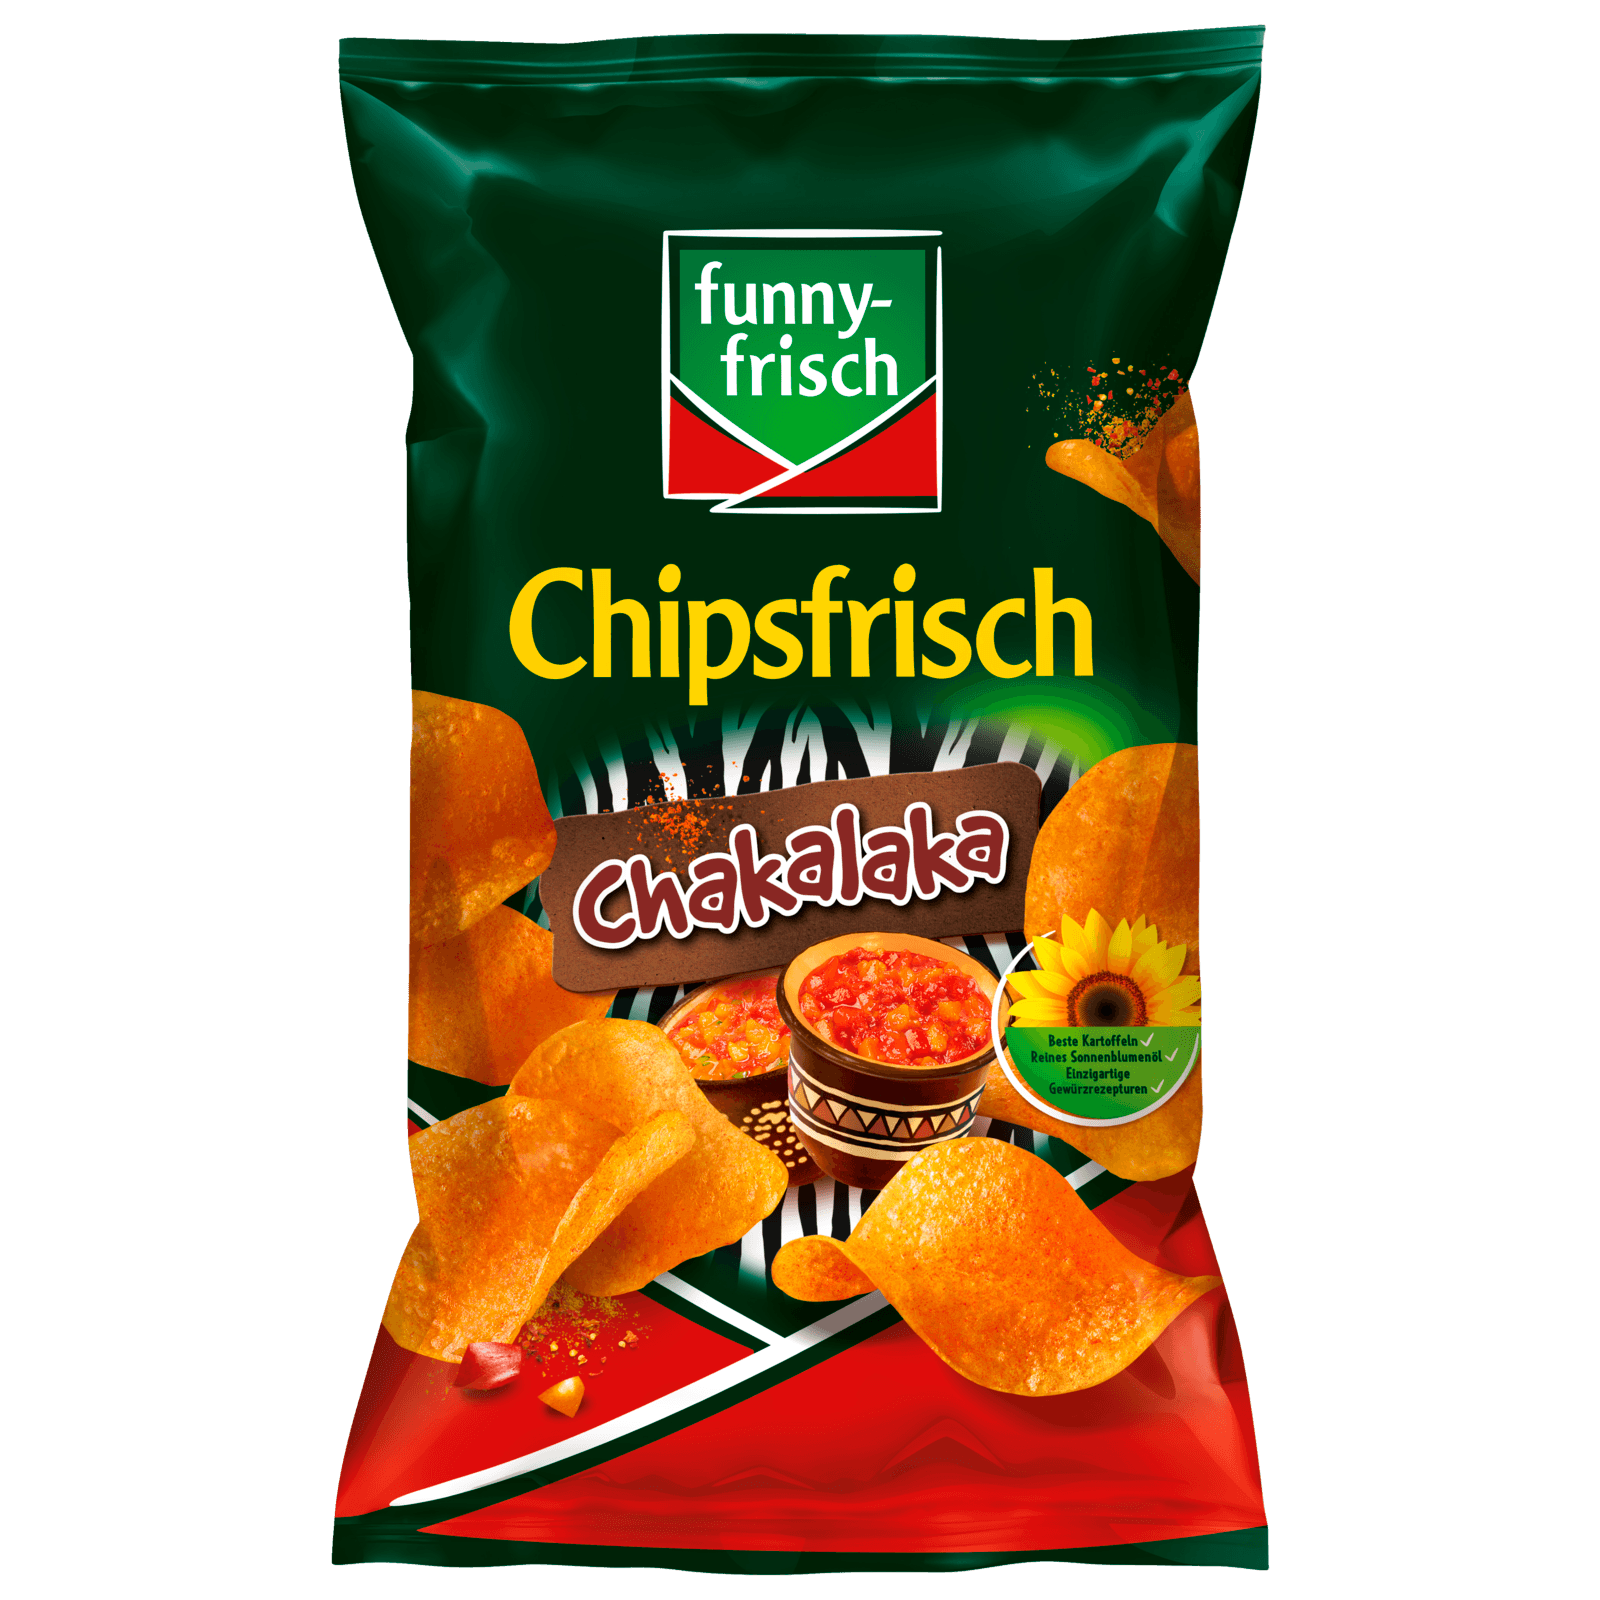 Funny Frisch Chipsfrisch Chakalaka 175g Bei Rewe Online Bestellen